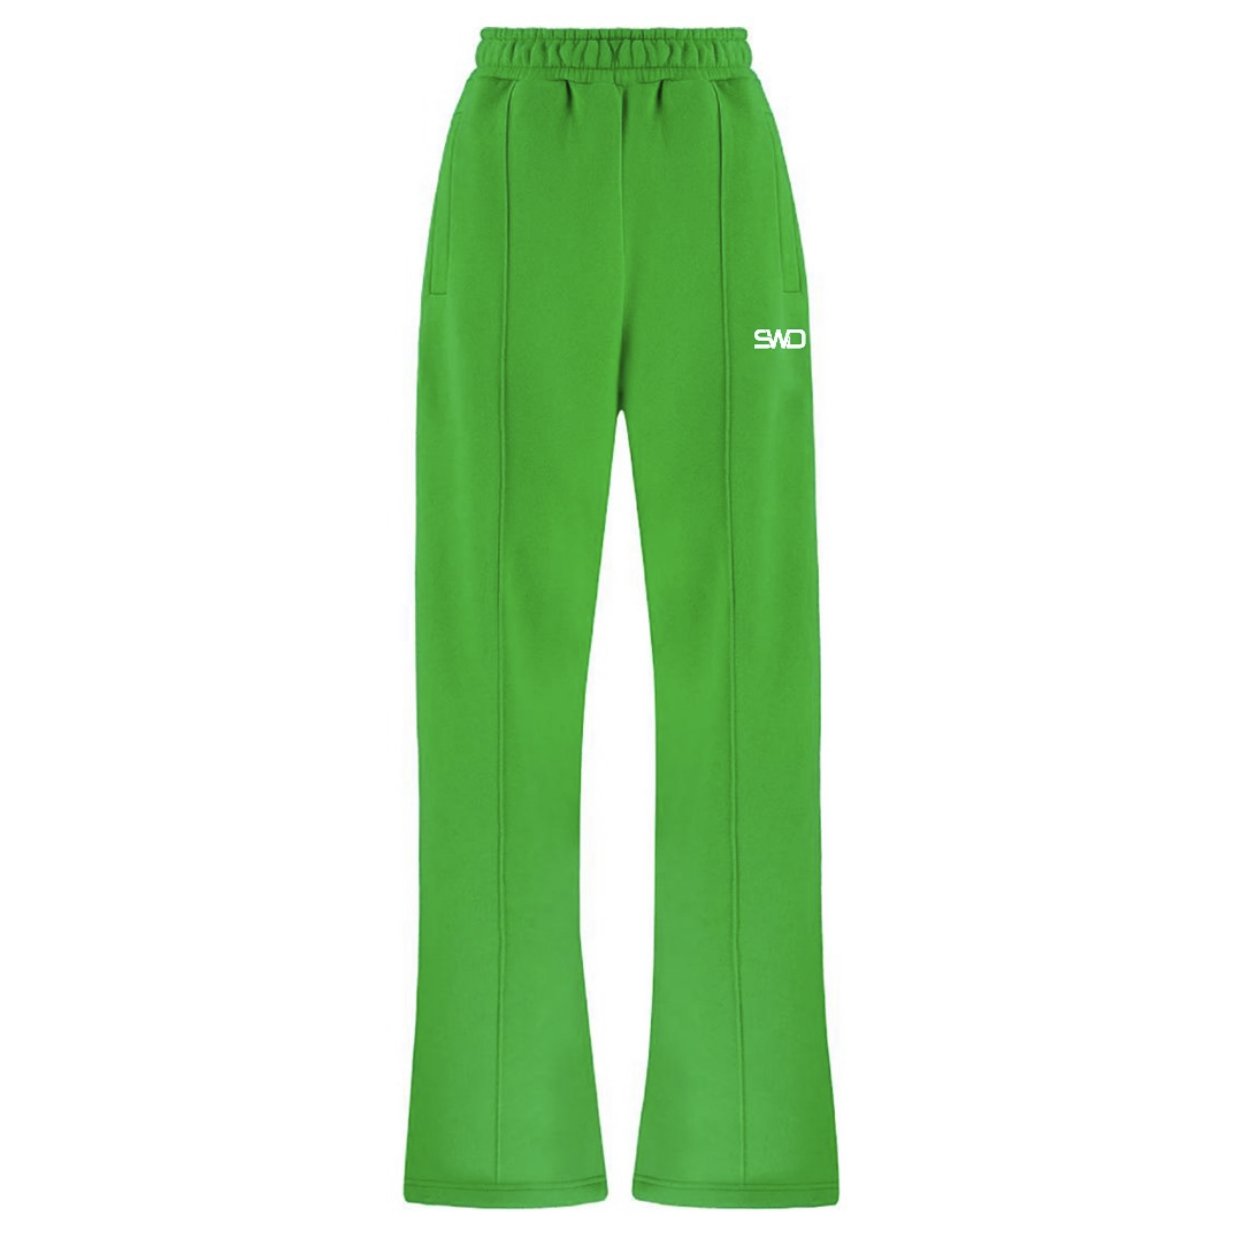 SWD logo sweatpants - Green - SWD - SWD Lifestyle - Classified as ...